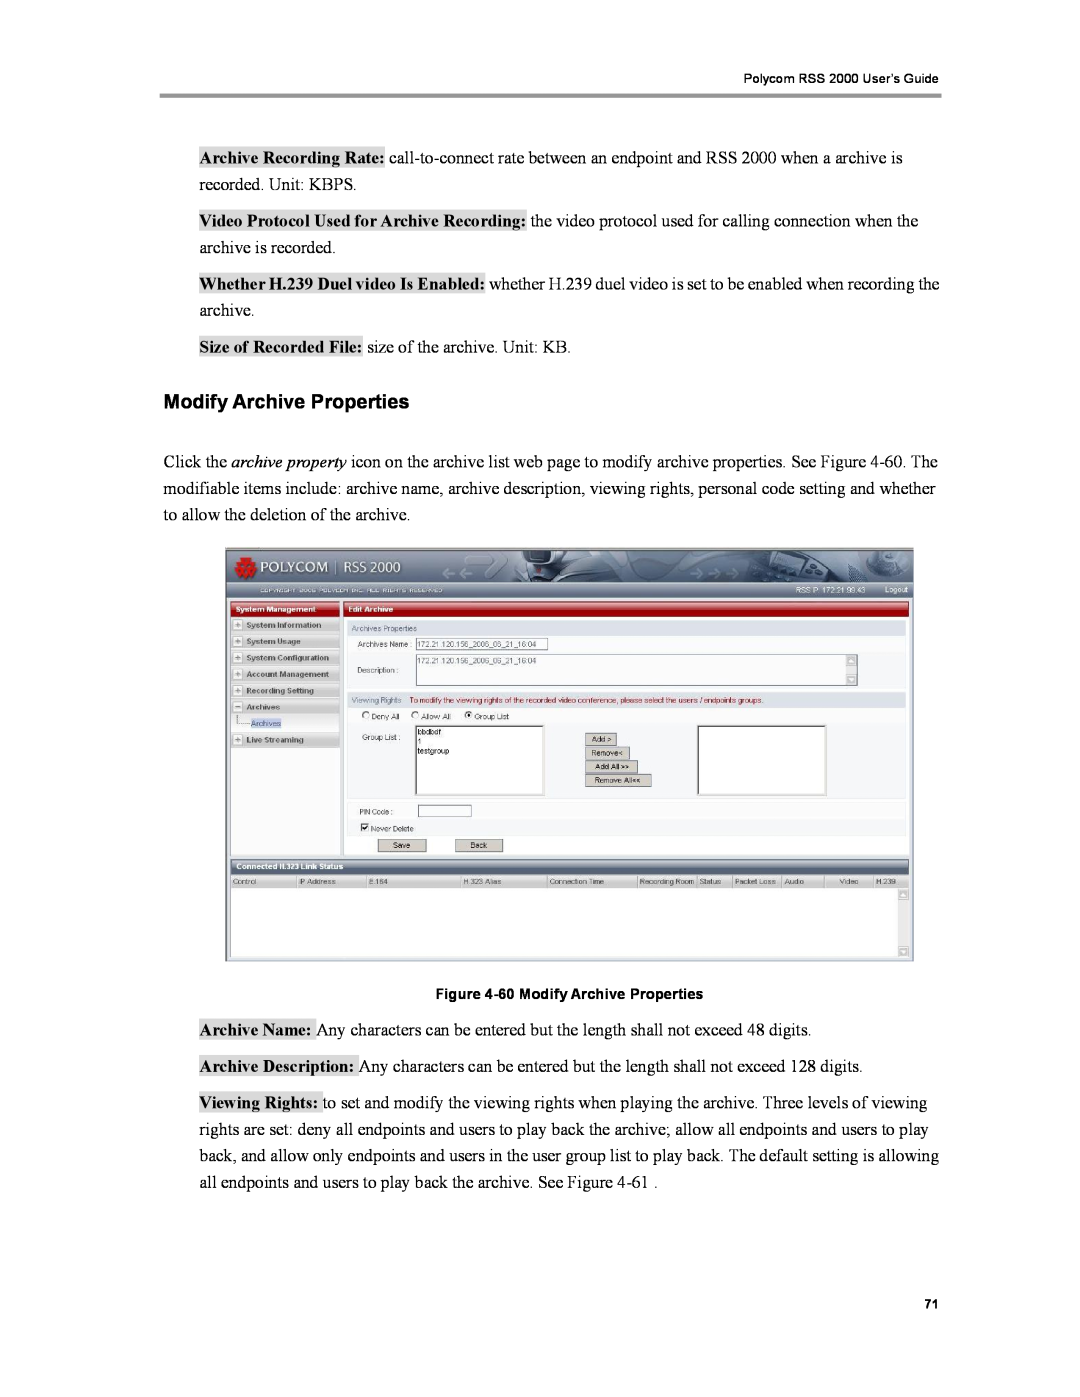 Polycom RSS 2000 manual Modify Archive Properties 